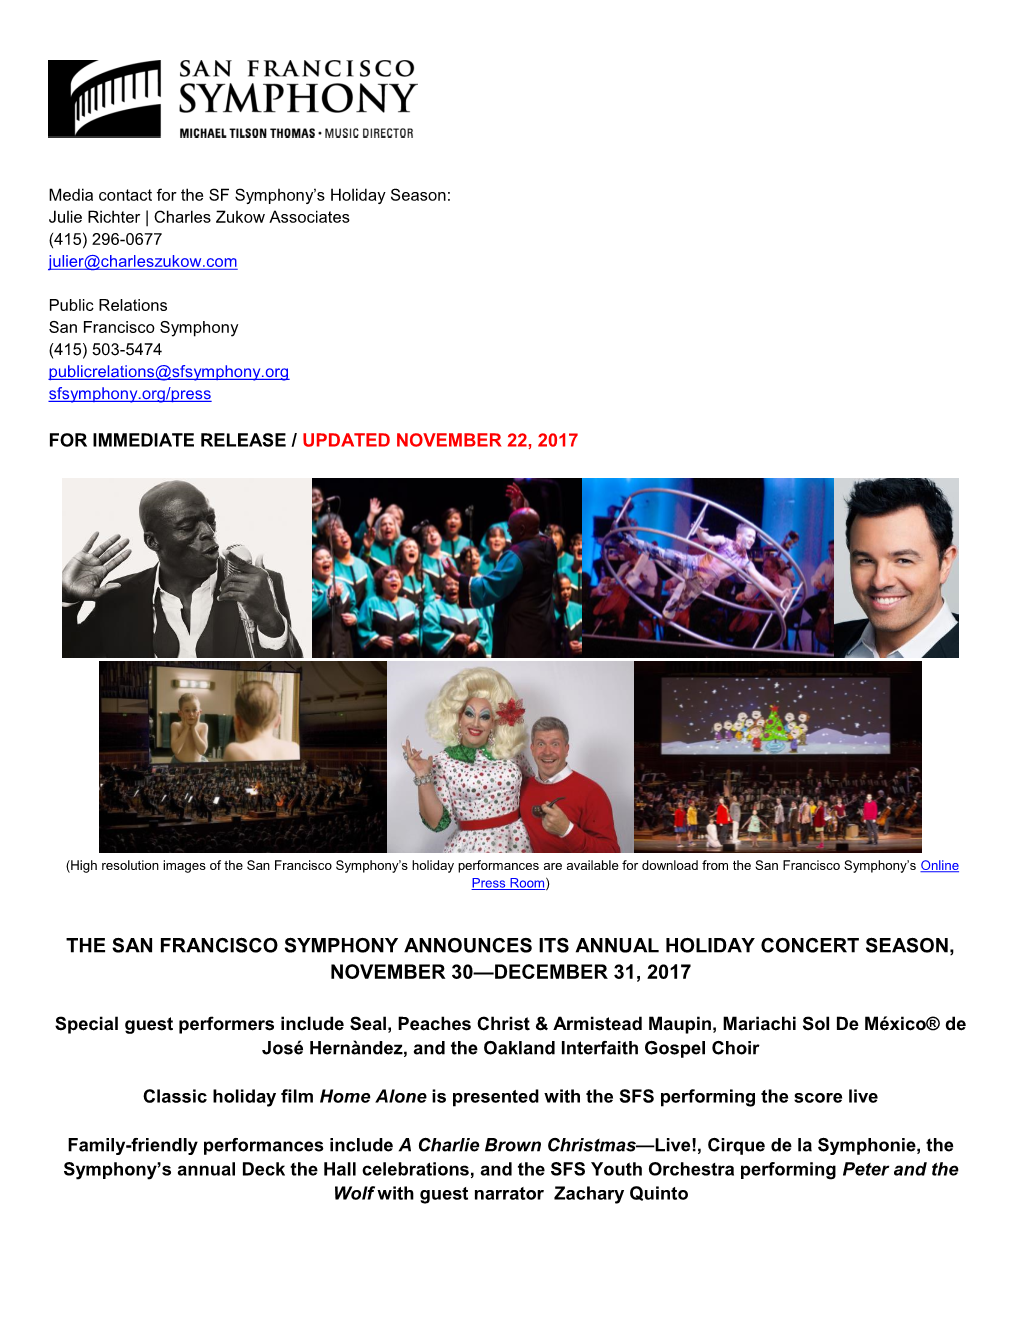 The San Francisco Symphony Announces Its Annual Holiday Concert Season, November 30—December 31, 2017